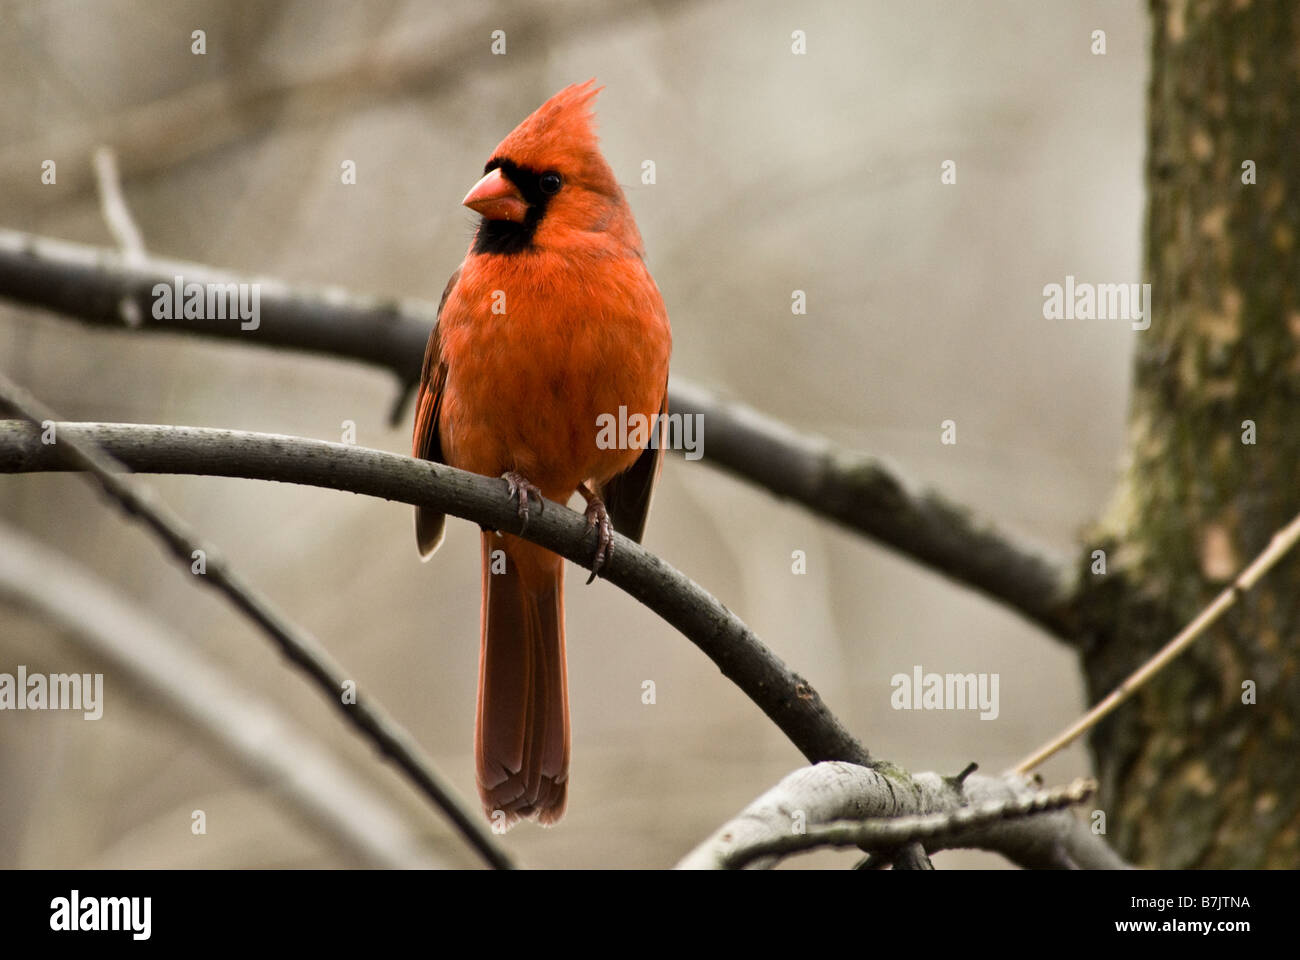 The Northern Cardinal (Cardinalis cardinalis) is a North American bird in the Cardinal family, Central Park New York USA Stock Photo